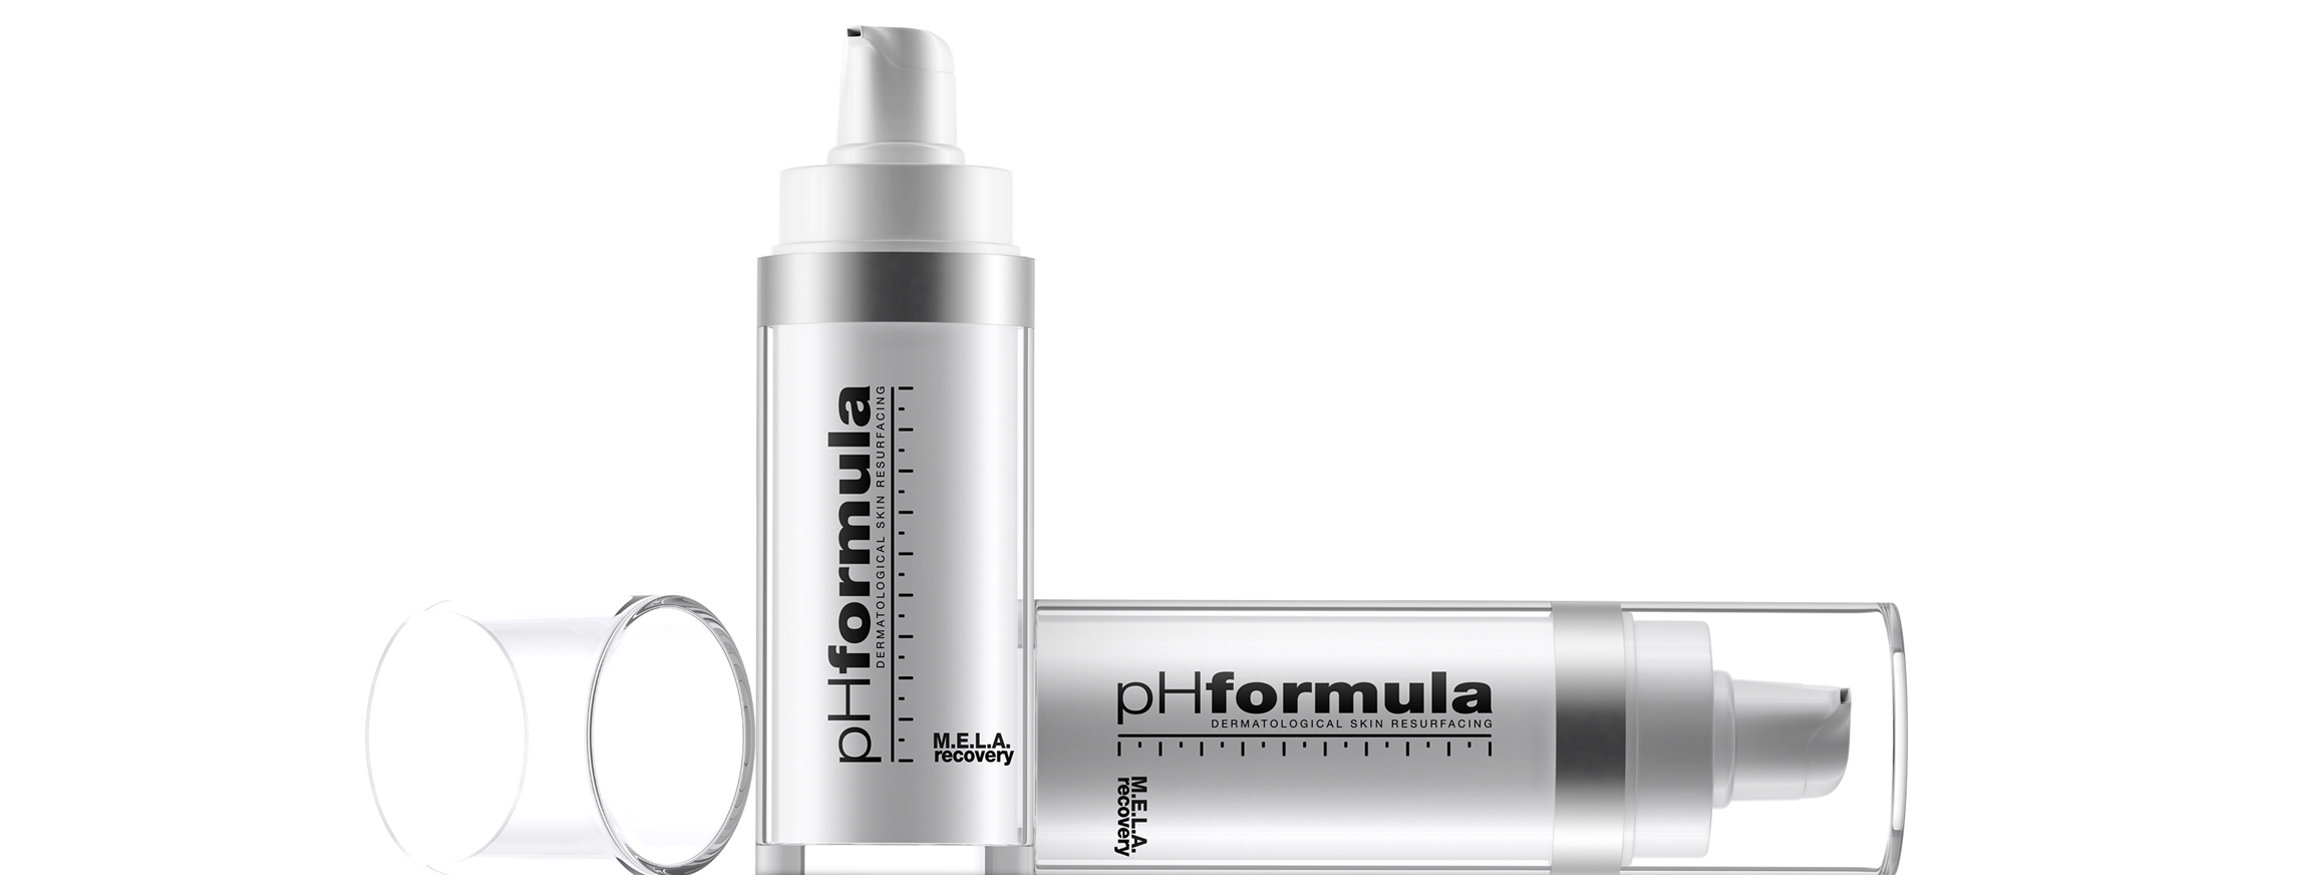 pHformula Solutions for Hyperpigmentation